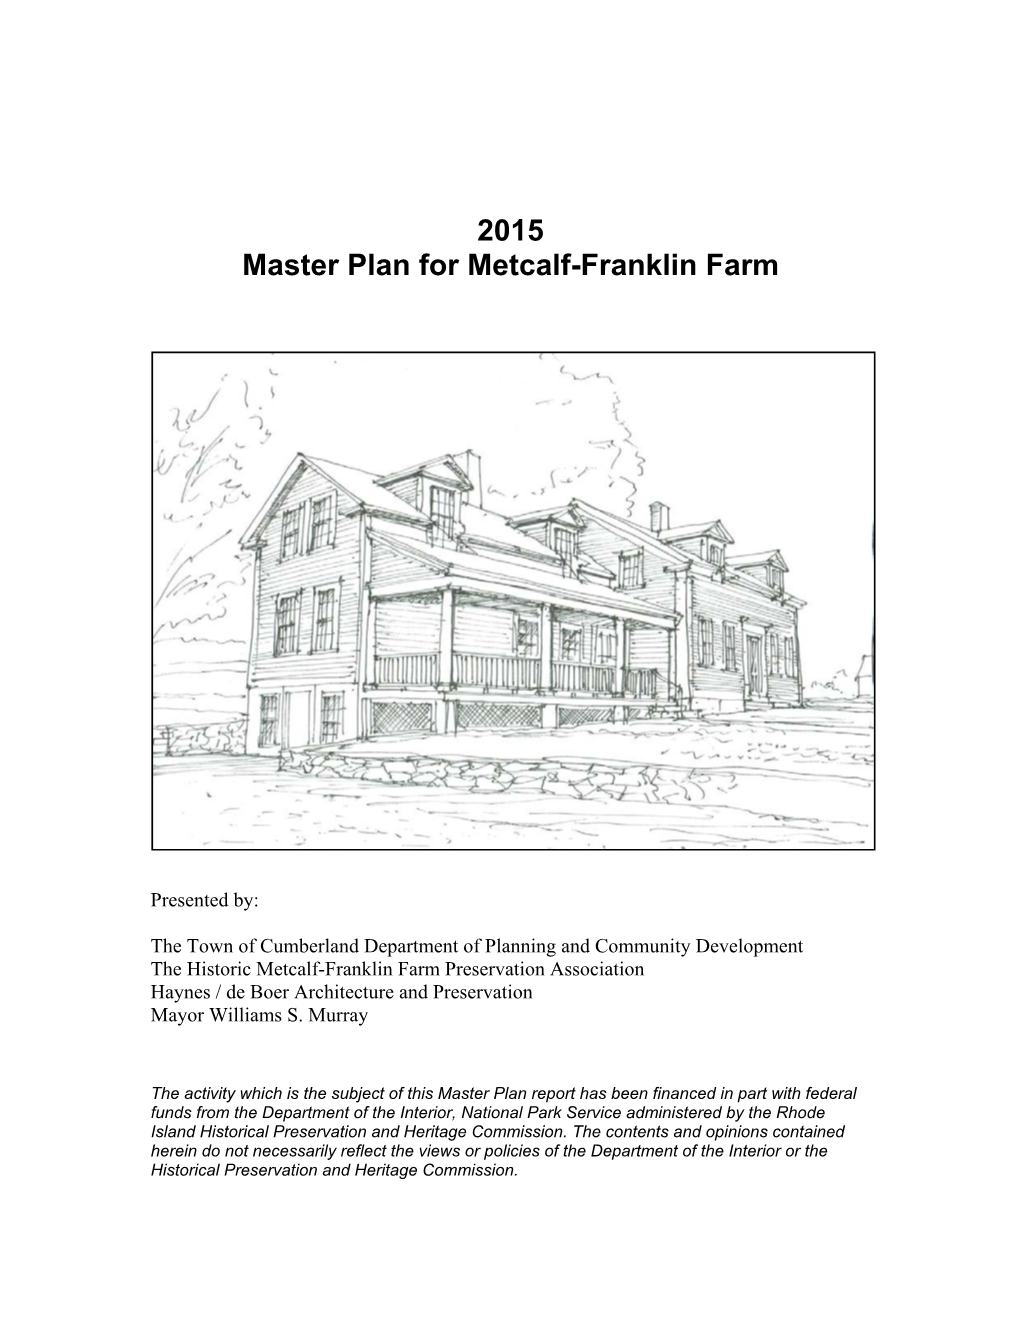 2015 Master Plan for Metcalf-Franklin Farm